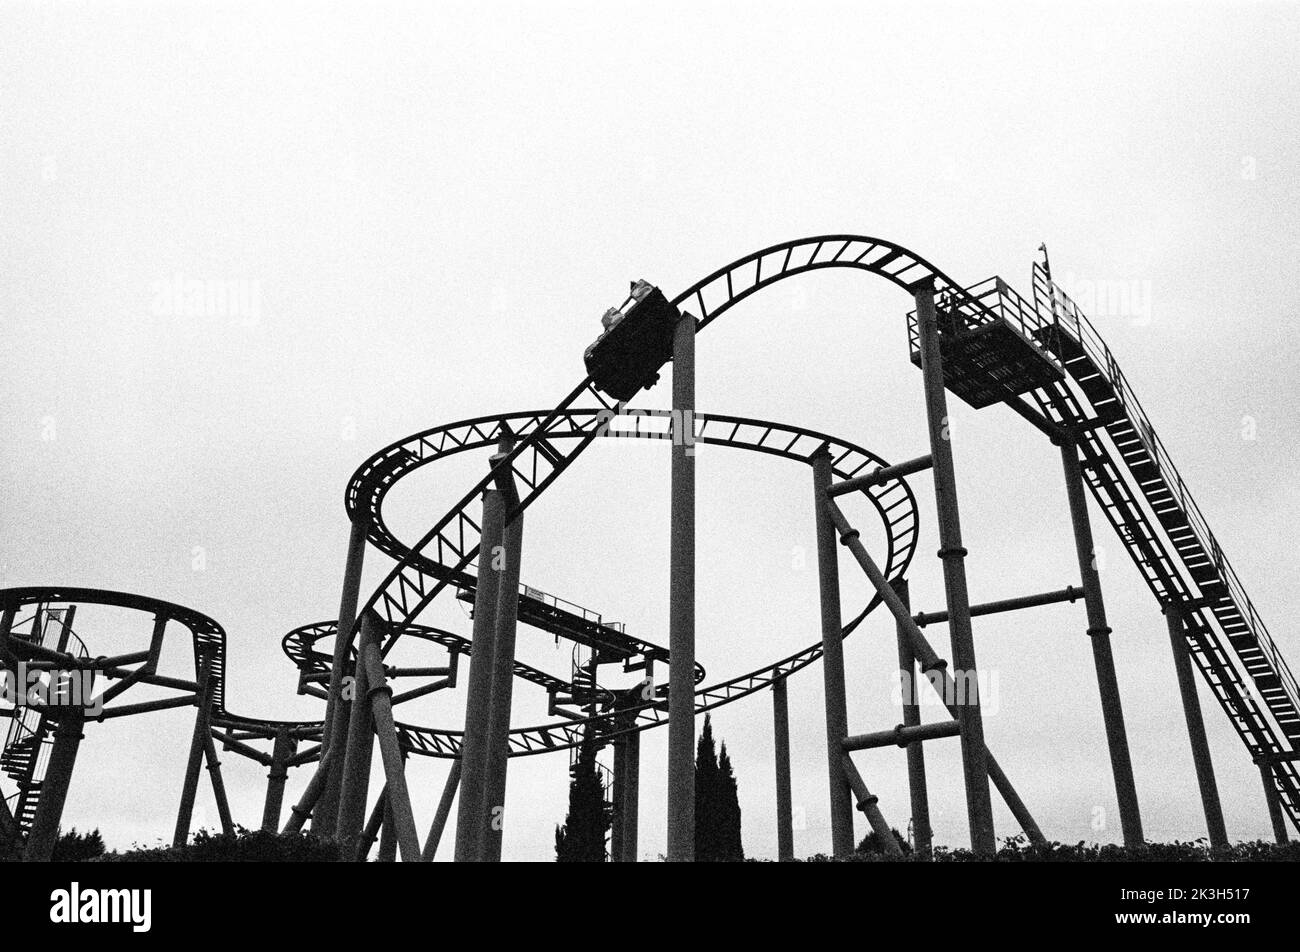 Cobra Rollercoaster, Paultons Park, ower, Romesy, Hampshire, Inghilterra, Regno Unito. Foto Stock